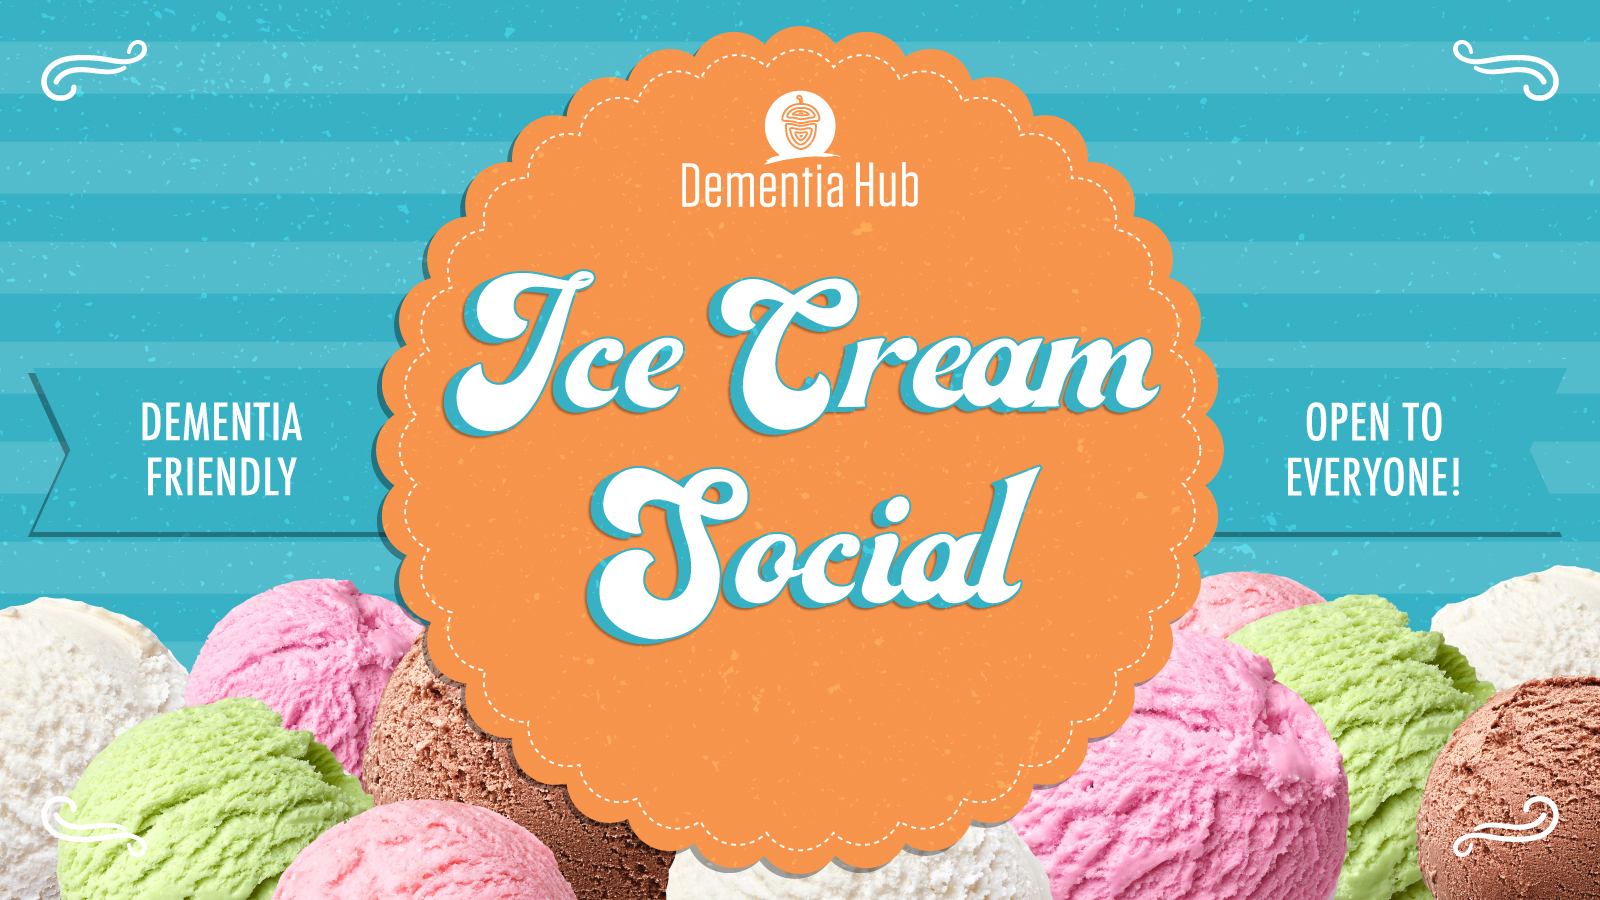 Ice Cream Social Dementia Friendly Community event in Mesa Arizona